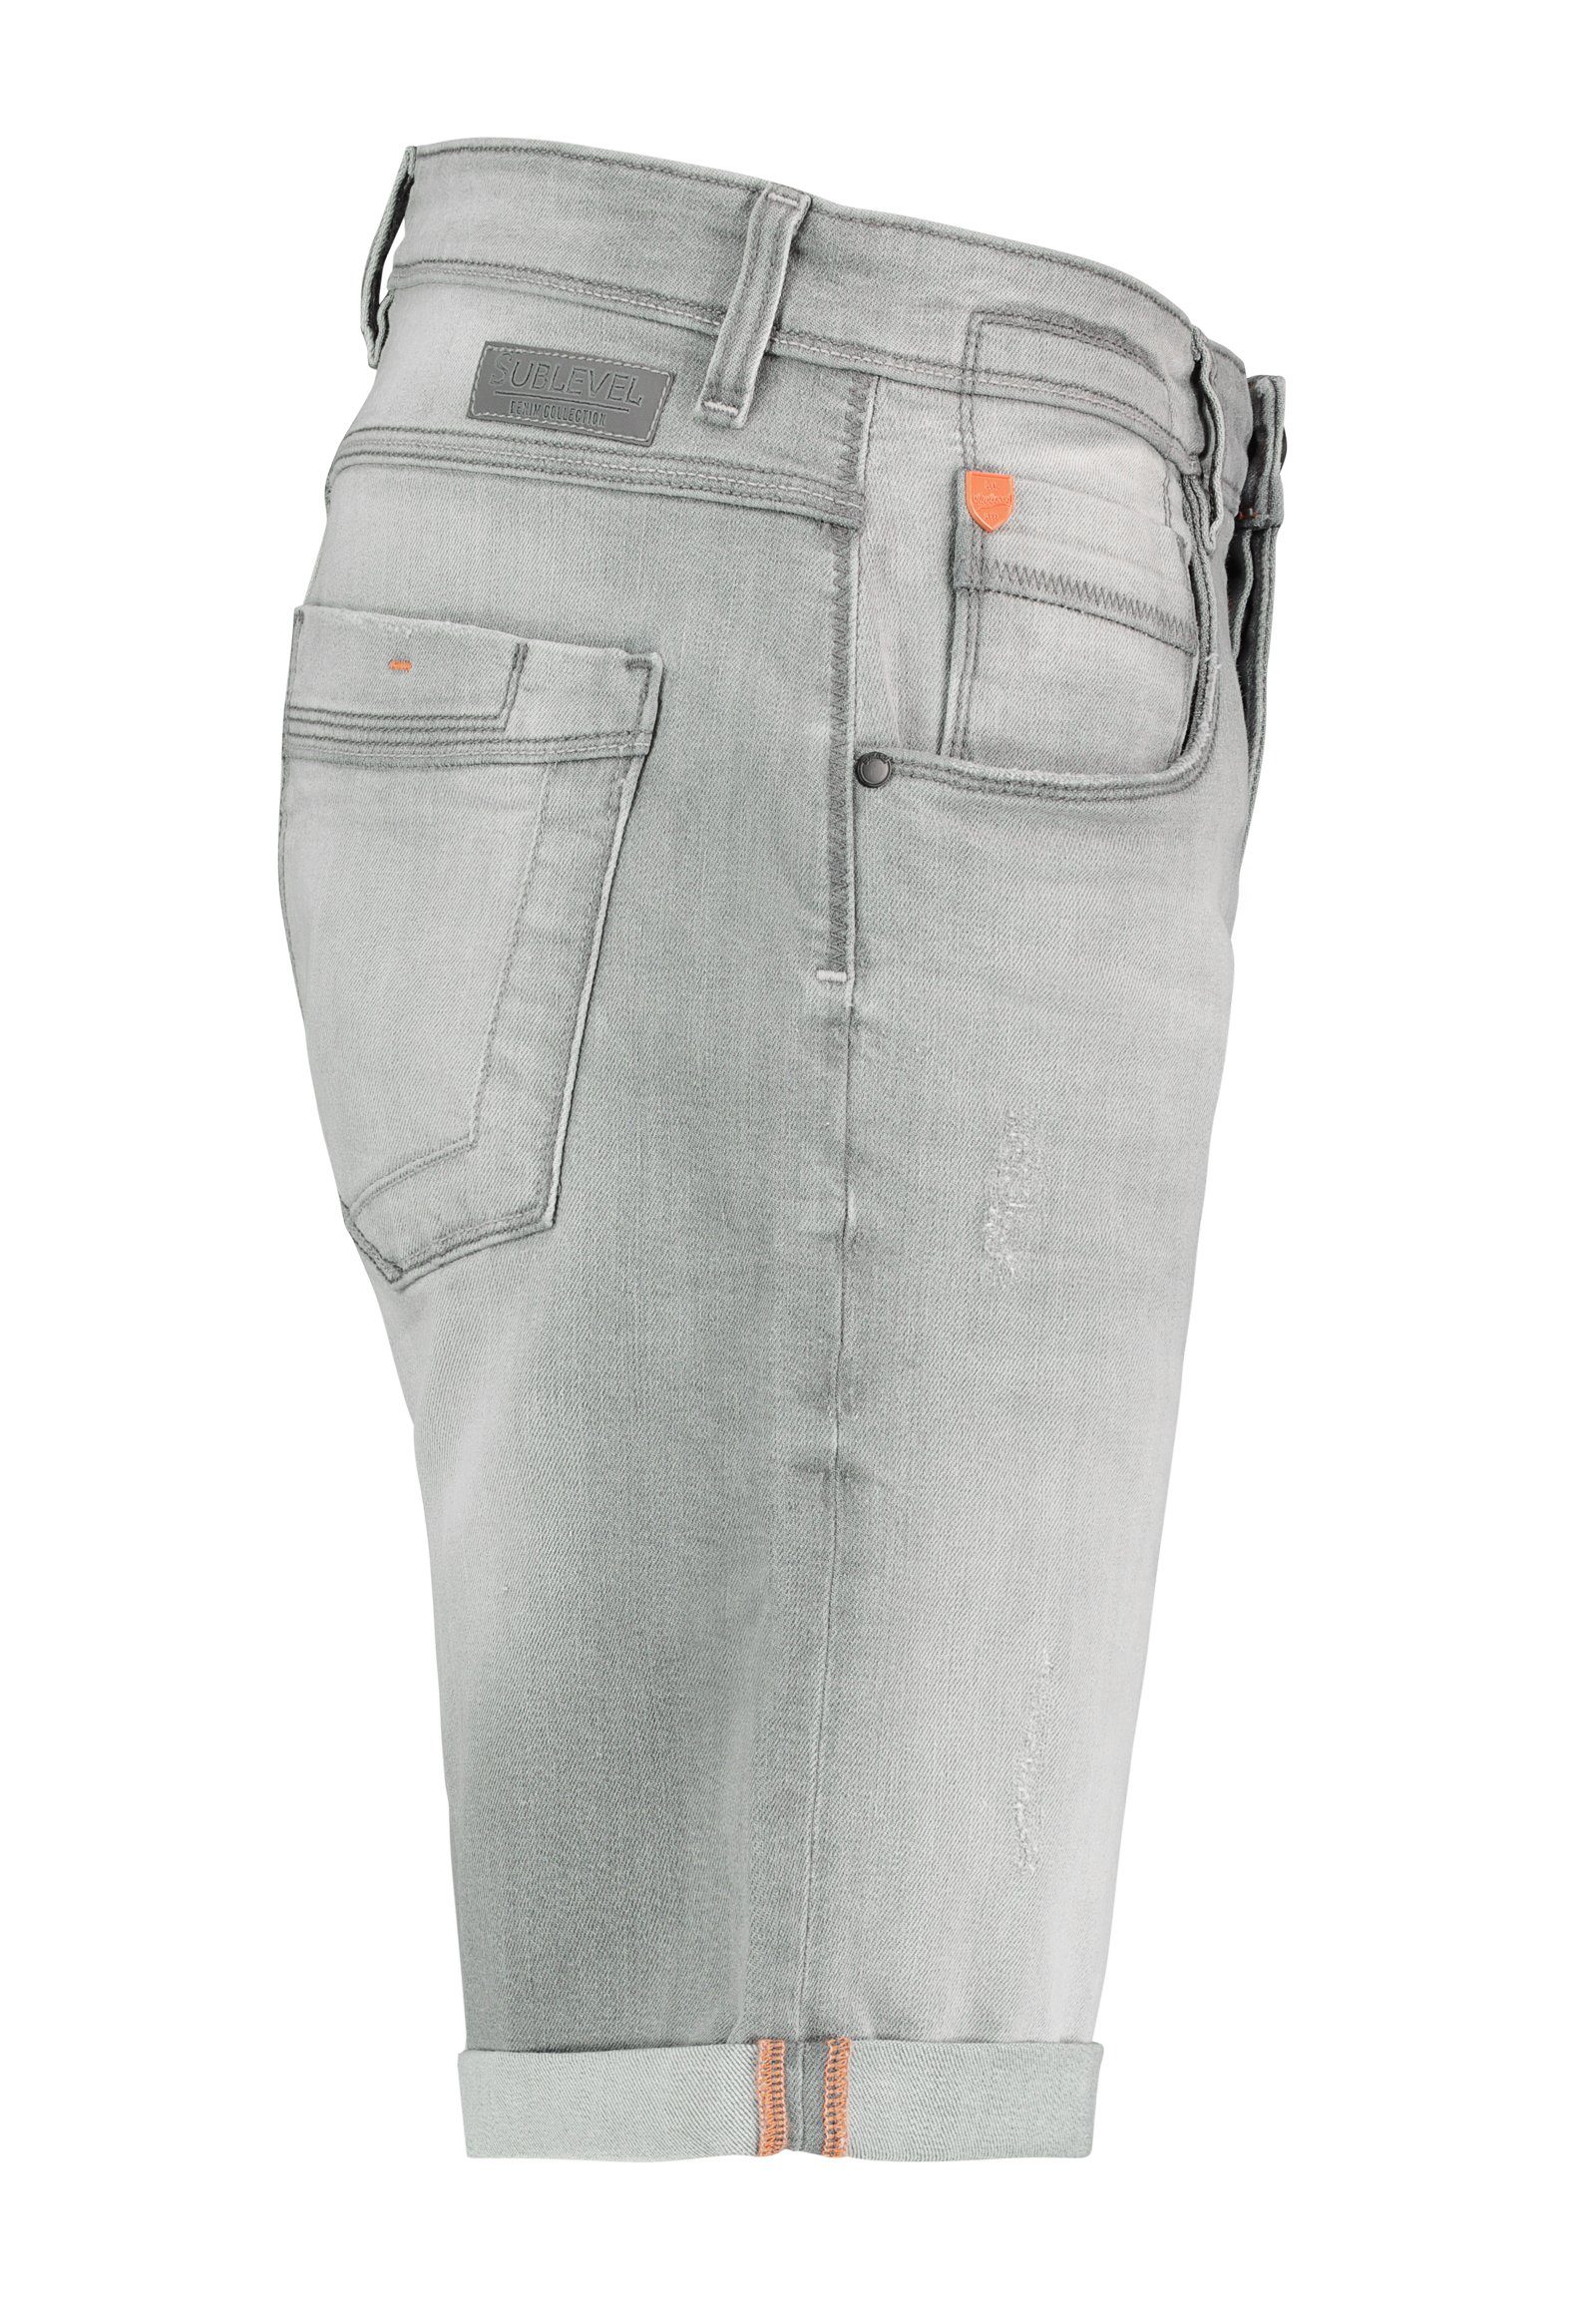 Hose kurze Denim Jeans Shorts Jogging Herren Urban Sweat Hell-Grau Freizeit Bermuda Surface Bermudas